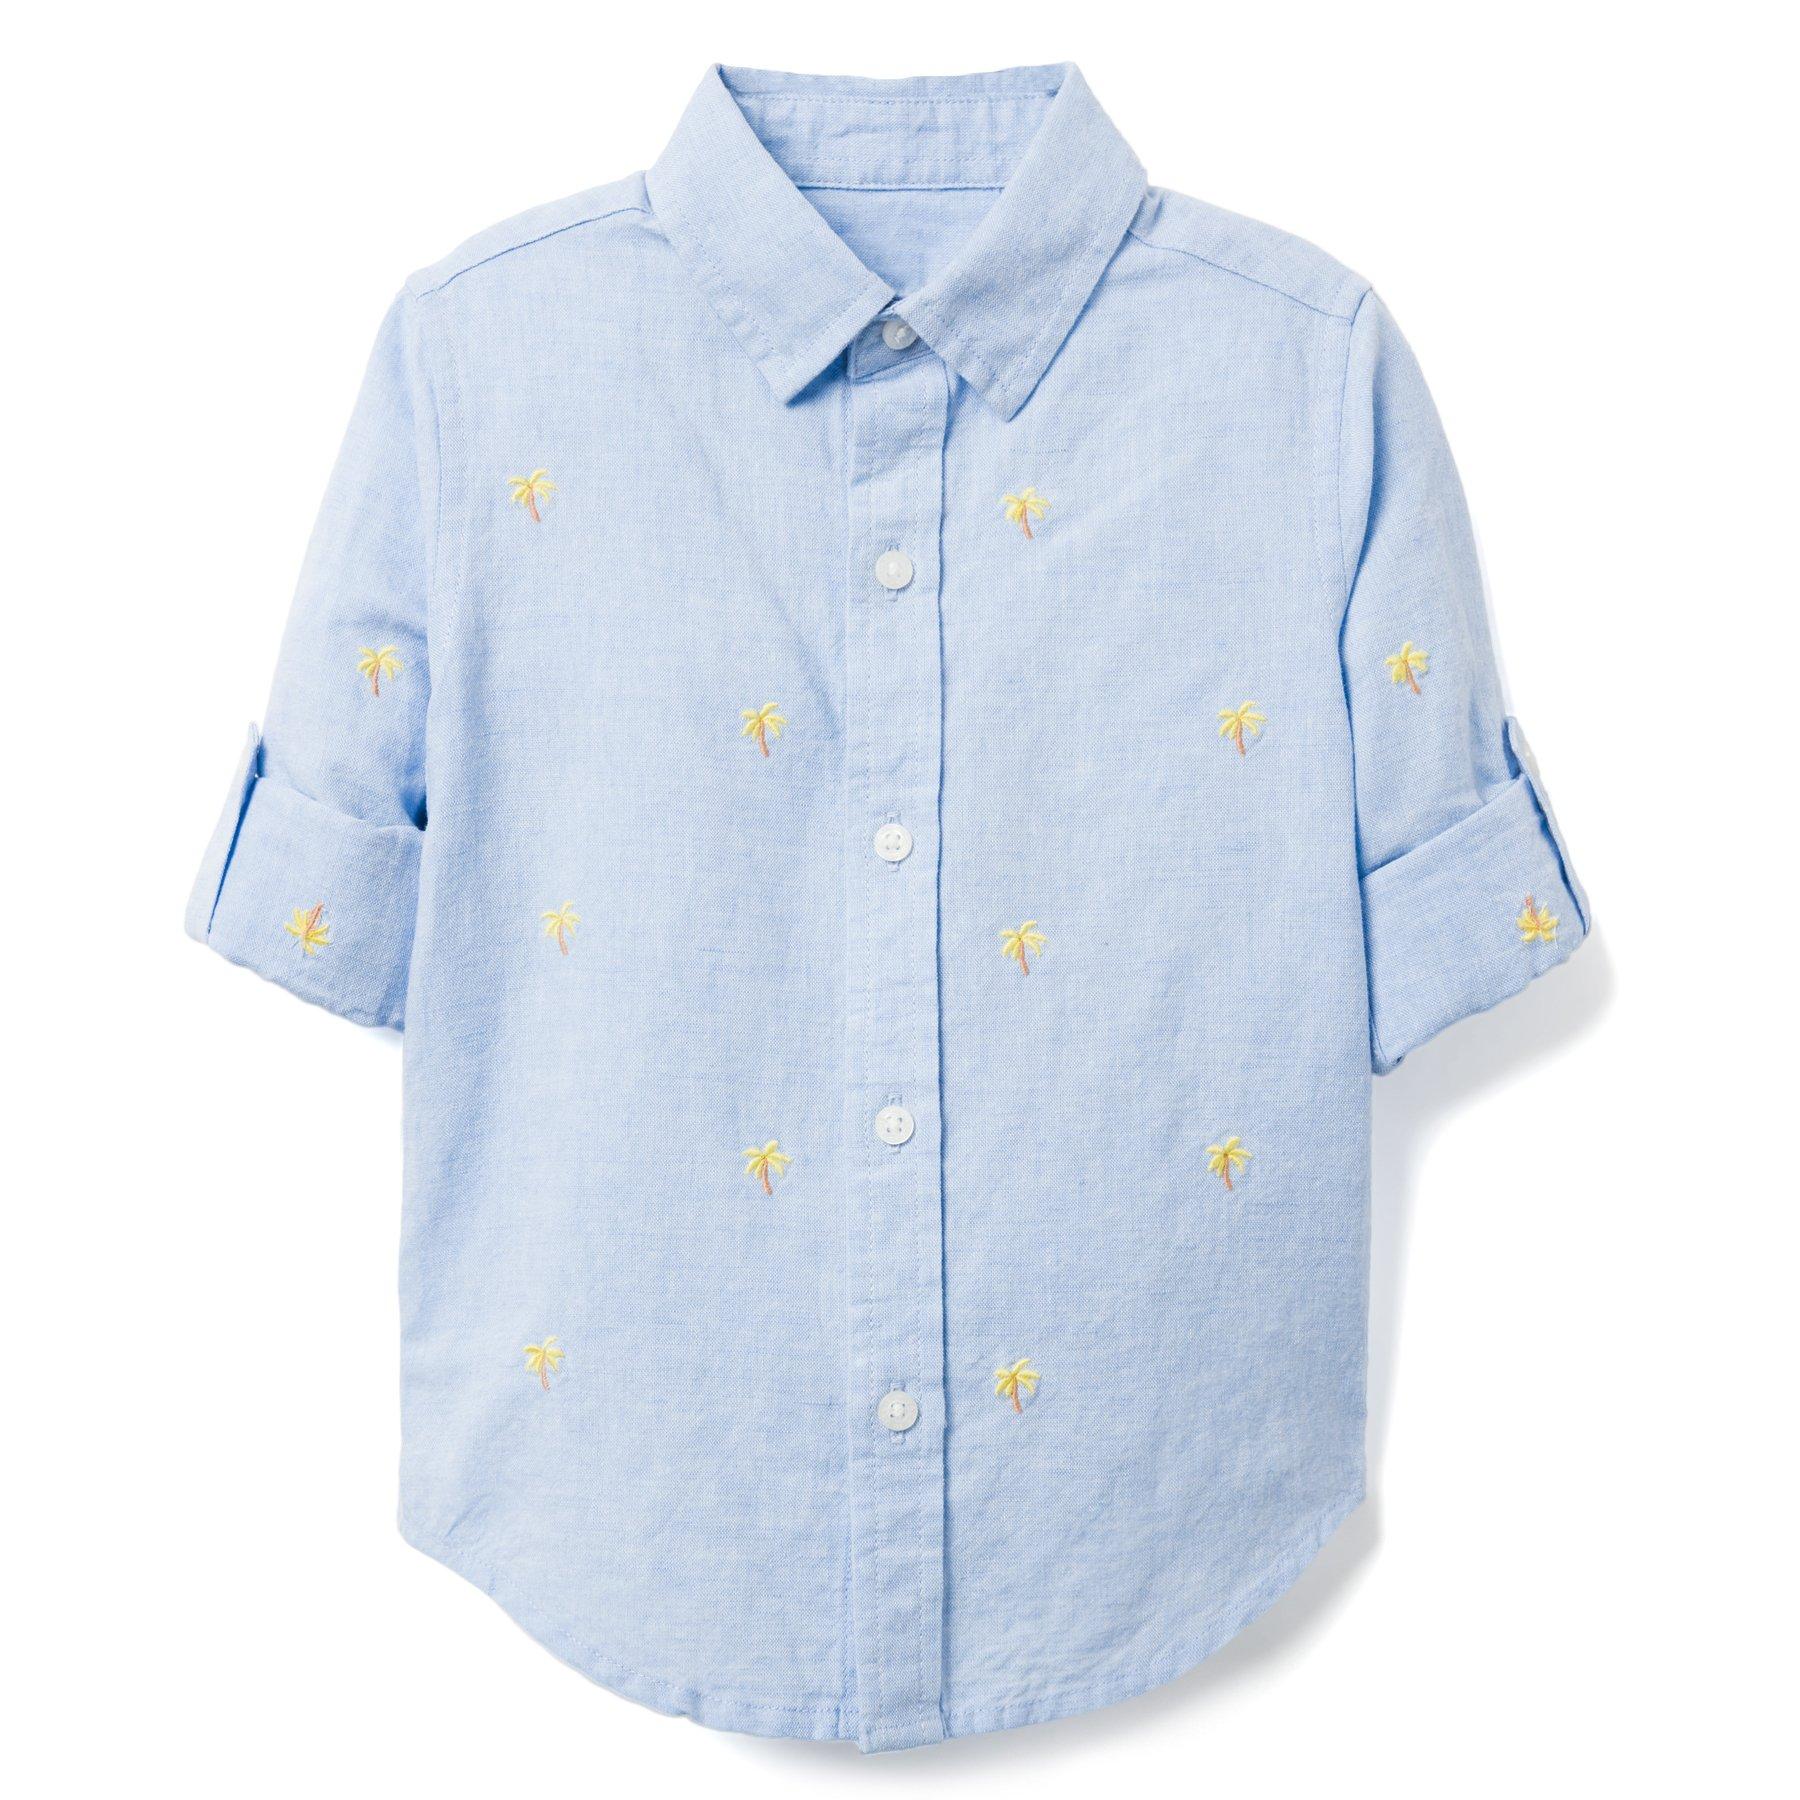 AERIN Embroidered Linen Shirt 